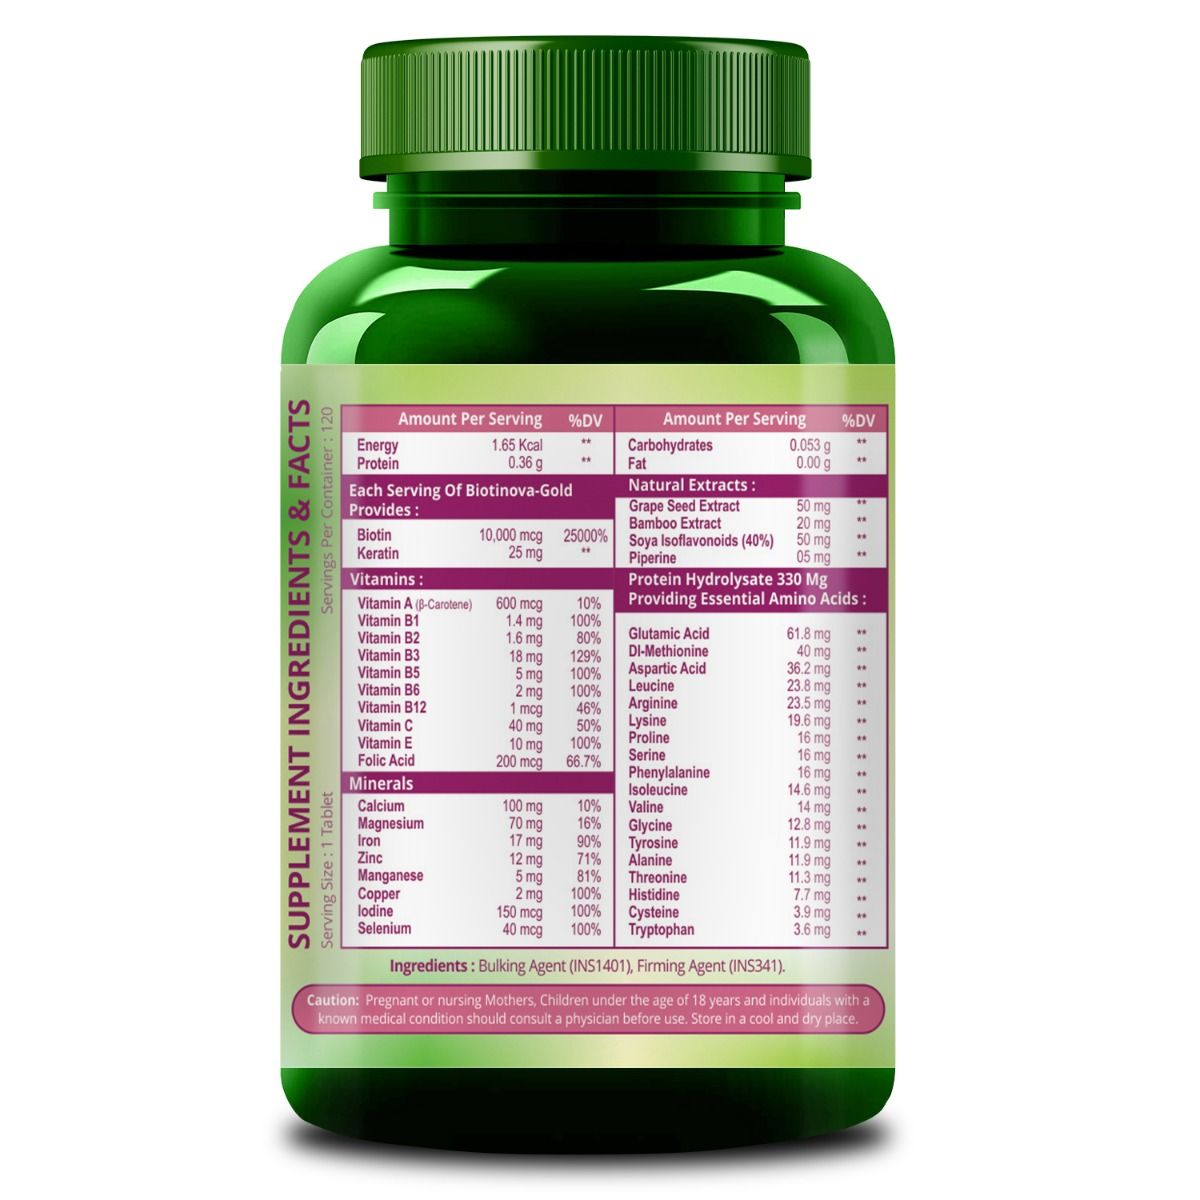 Himalayan Organics Biotin 10000 mcg with Keratin+Amino Acids+Multivitamin, 120 Tablets, Pack of 1 